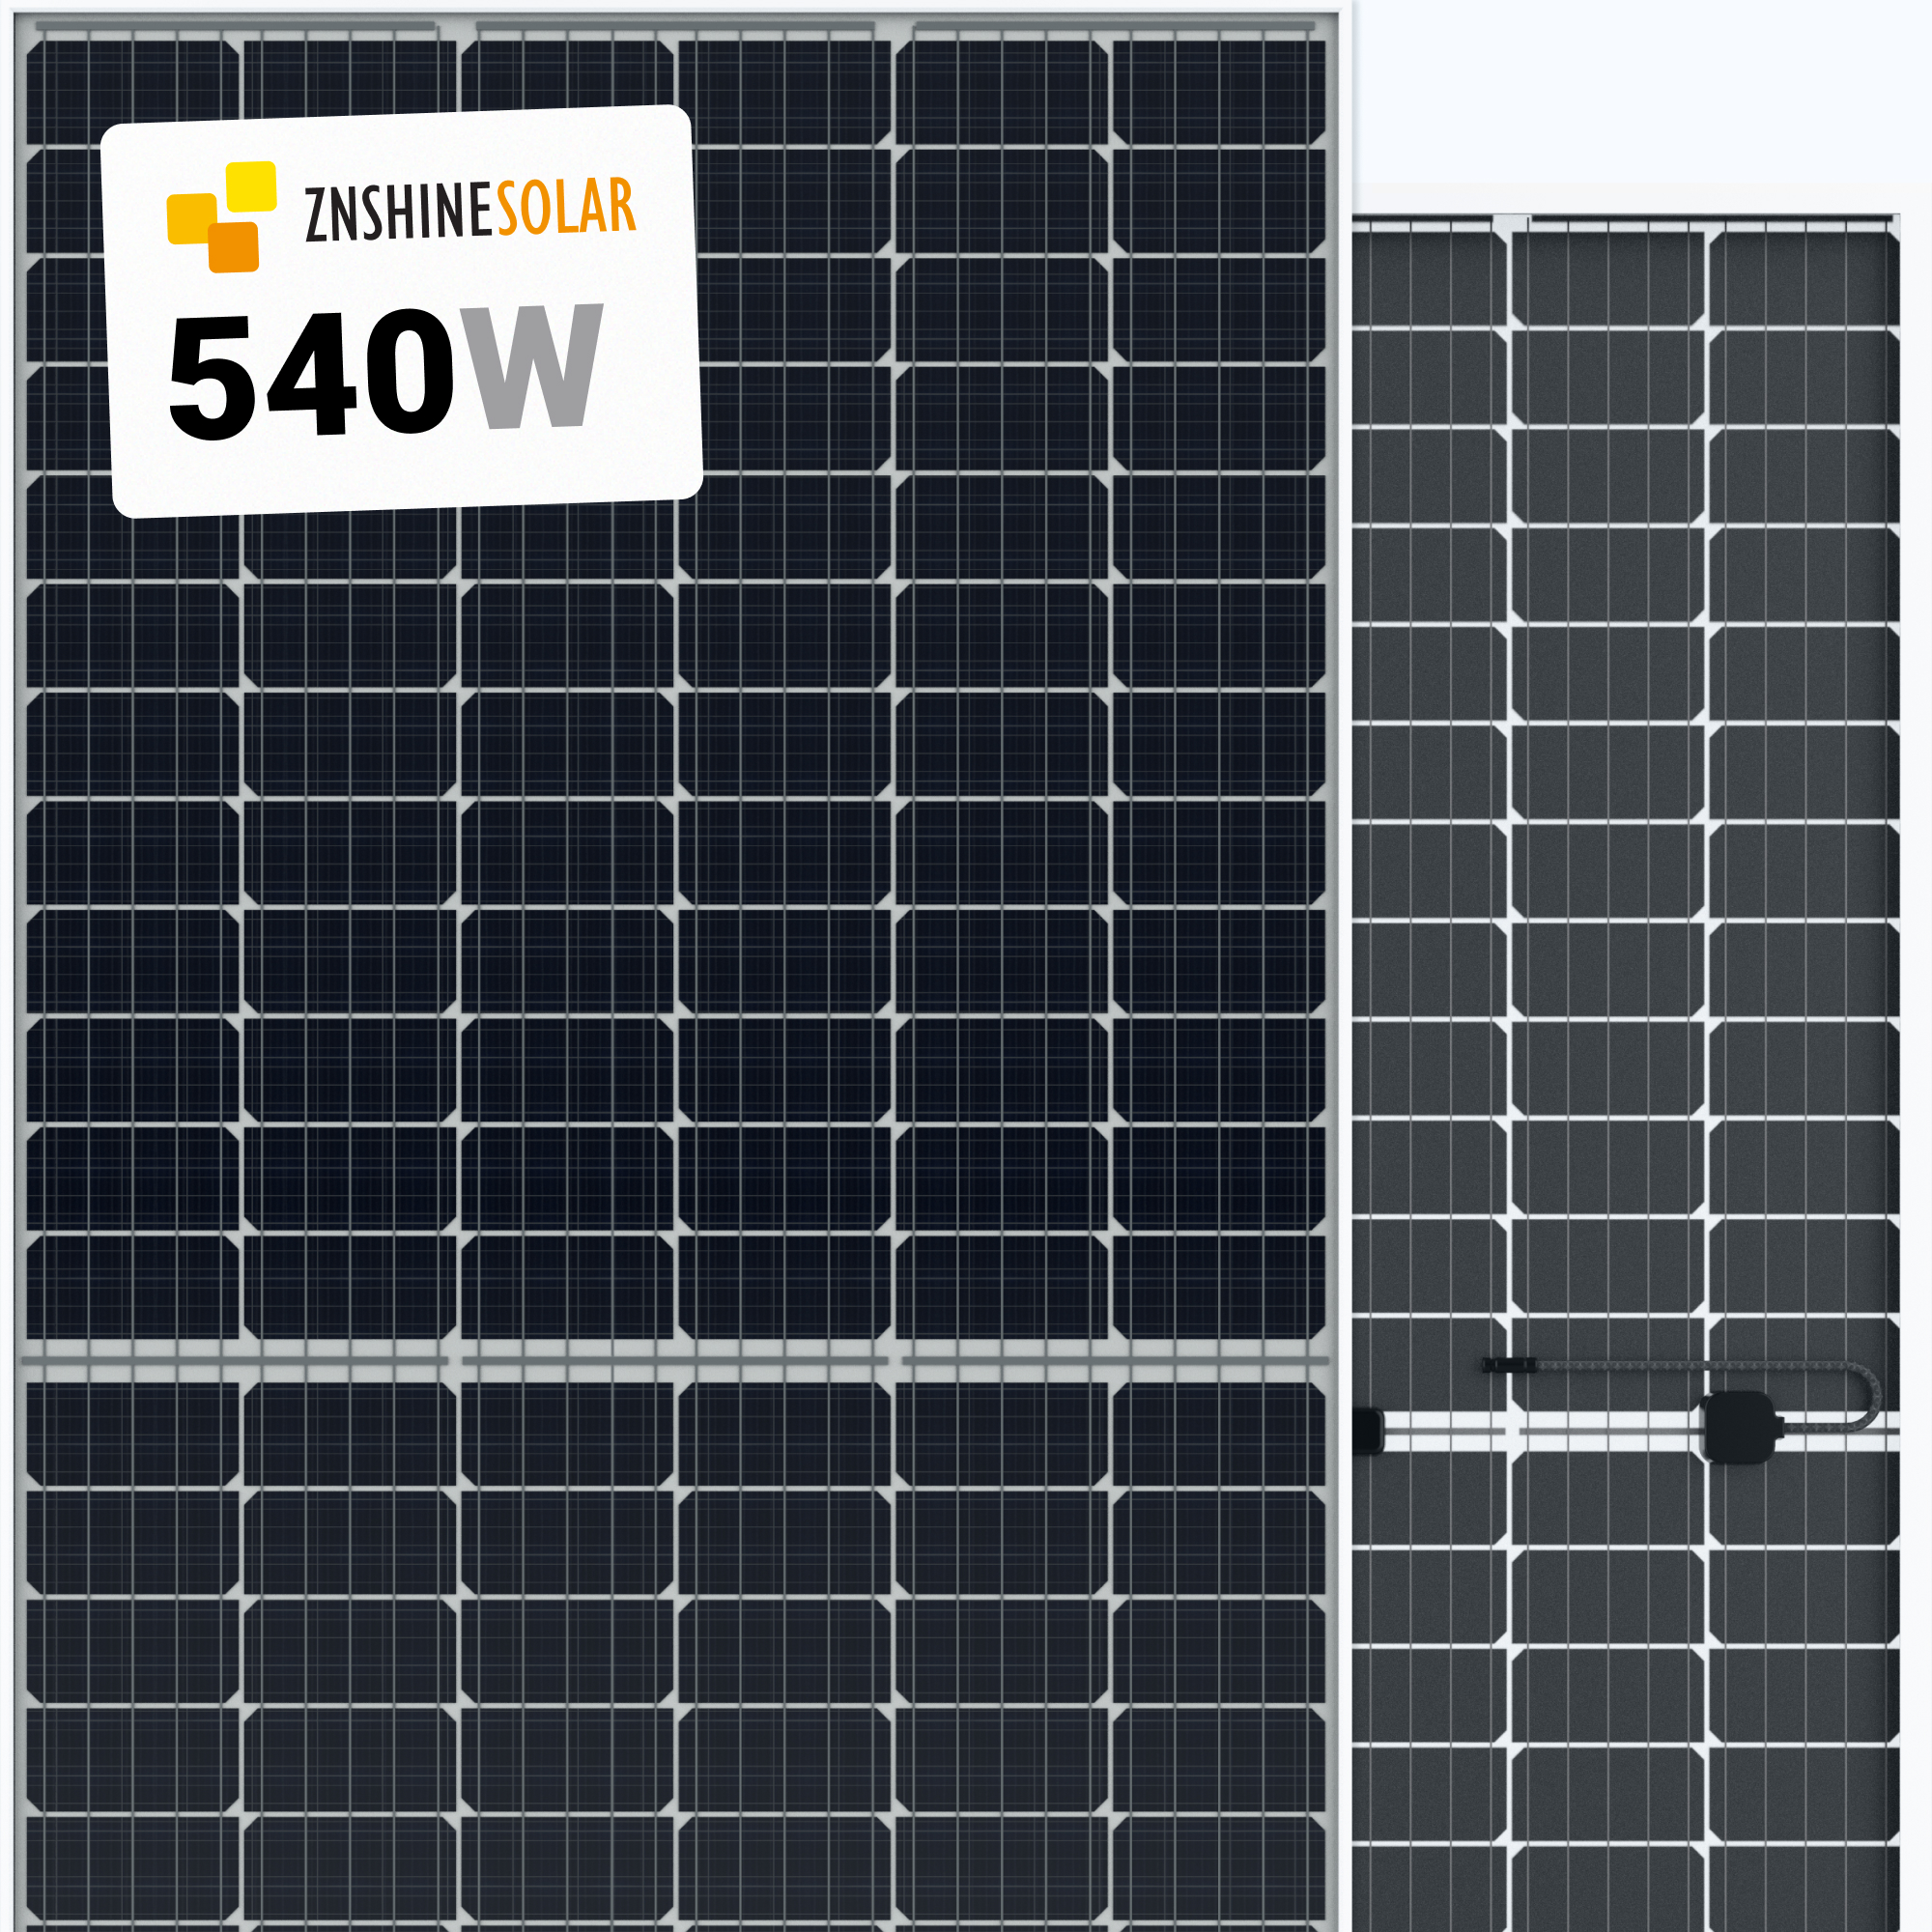 ZNShine Solar 540W Solar Panel 144 Cell Bifacial ZXM7-SHLDD144-540 